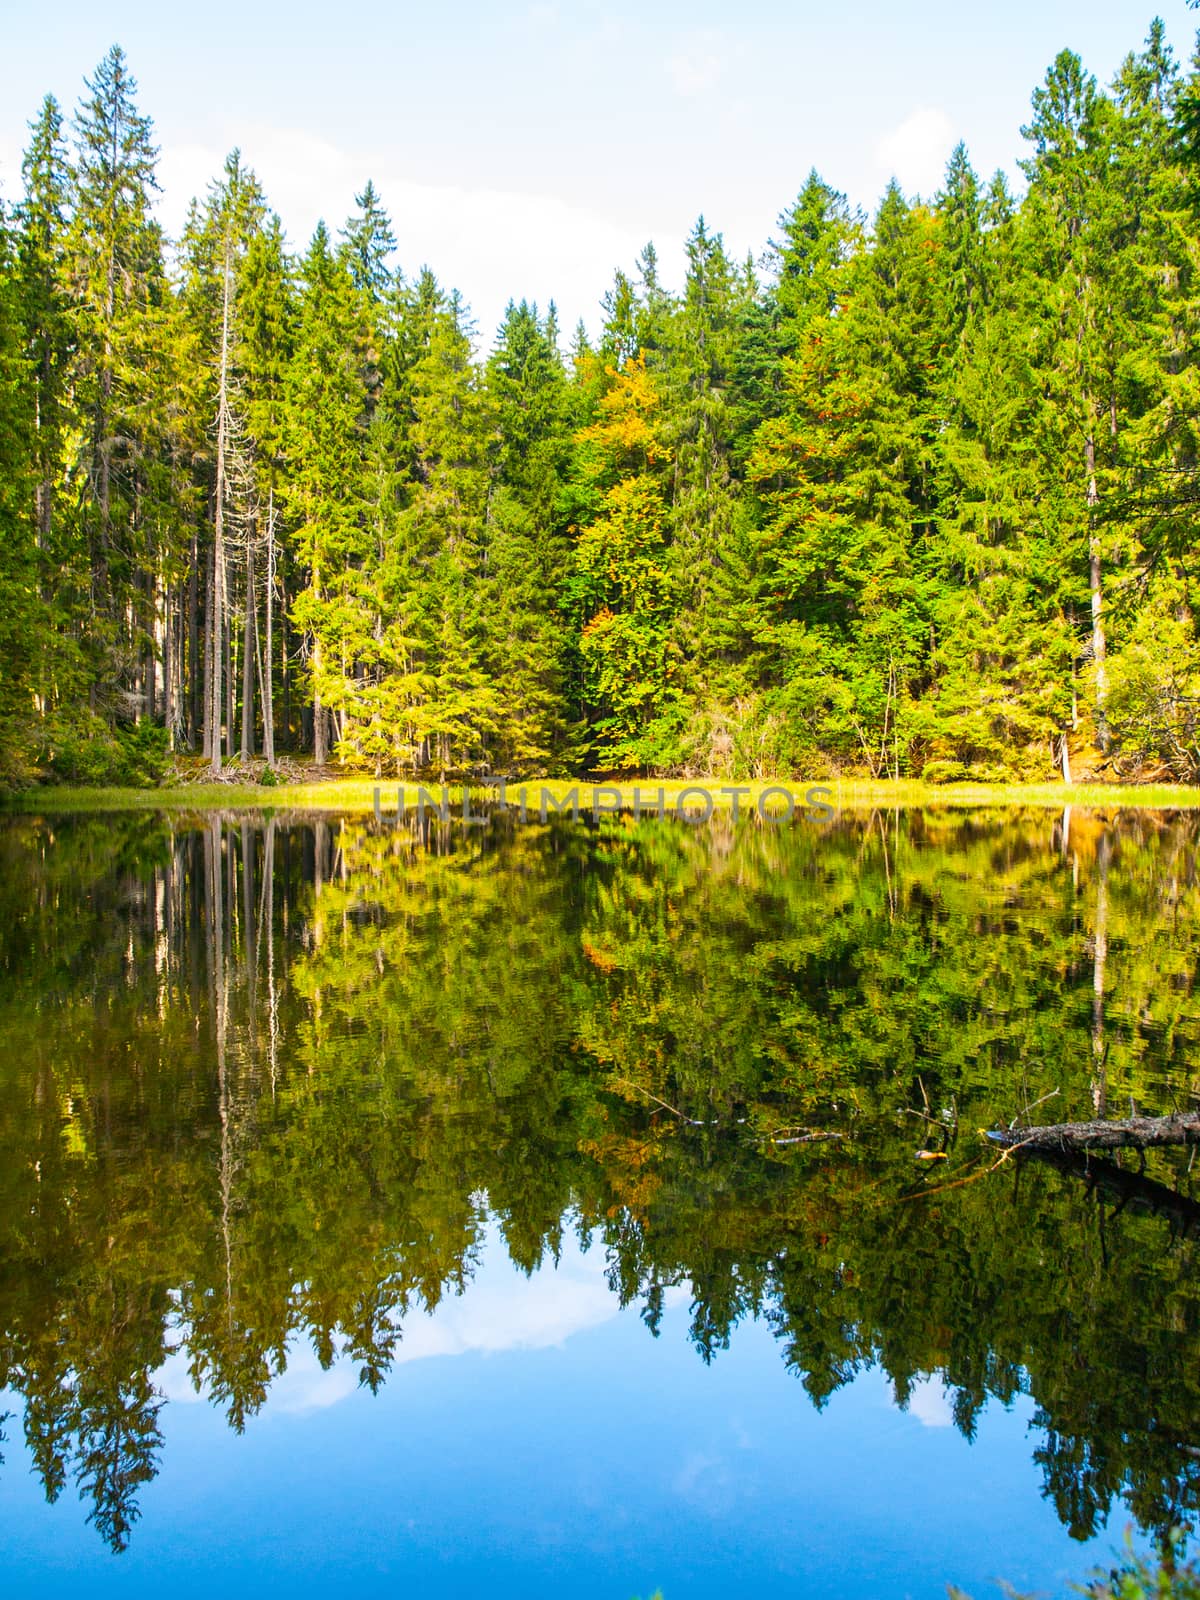 Boubin lake. Reflection of lush green trees of Boubin Primeval Forest, Sumava Mountains, Czech Republic by pyty